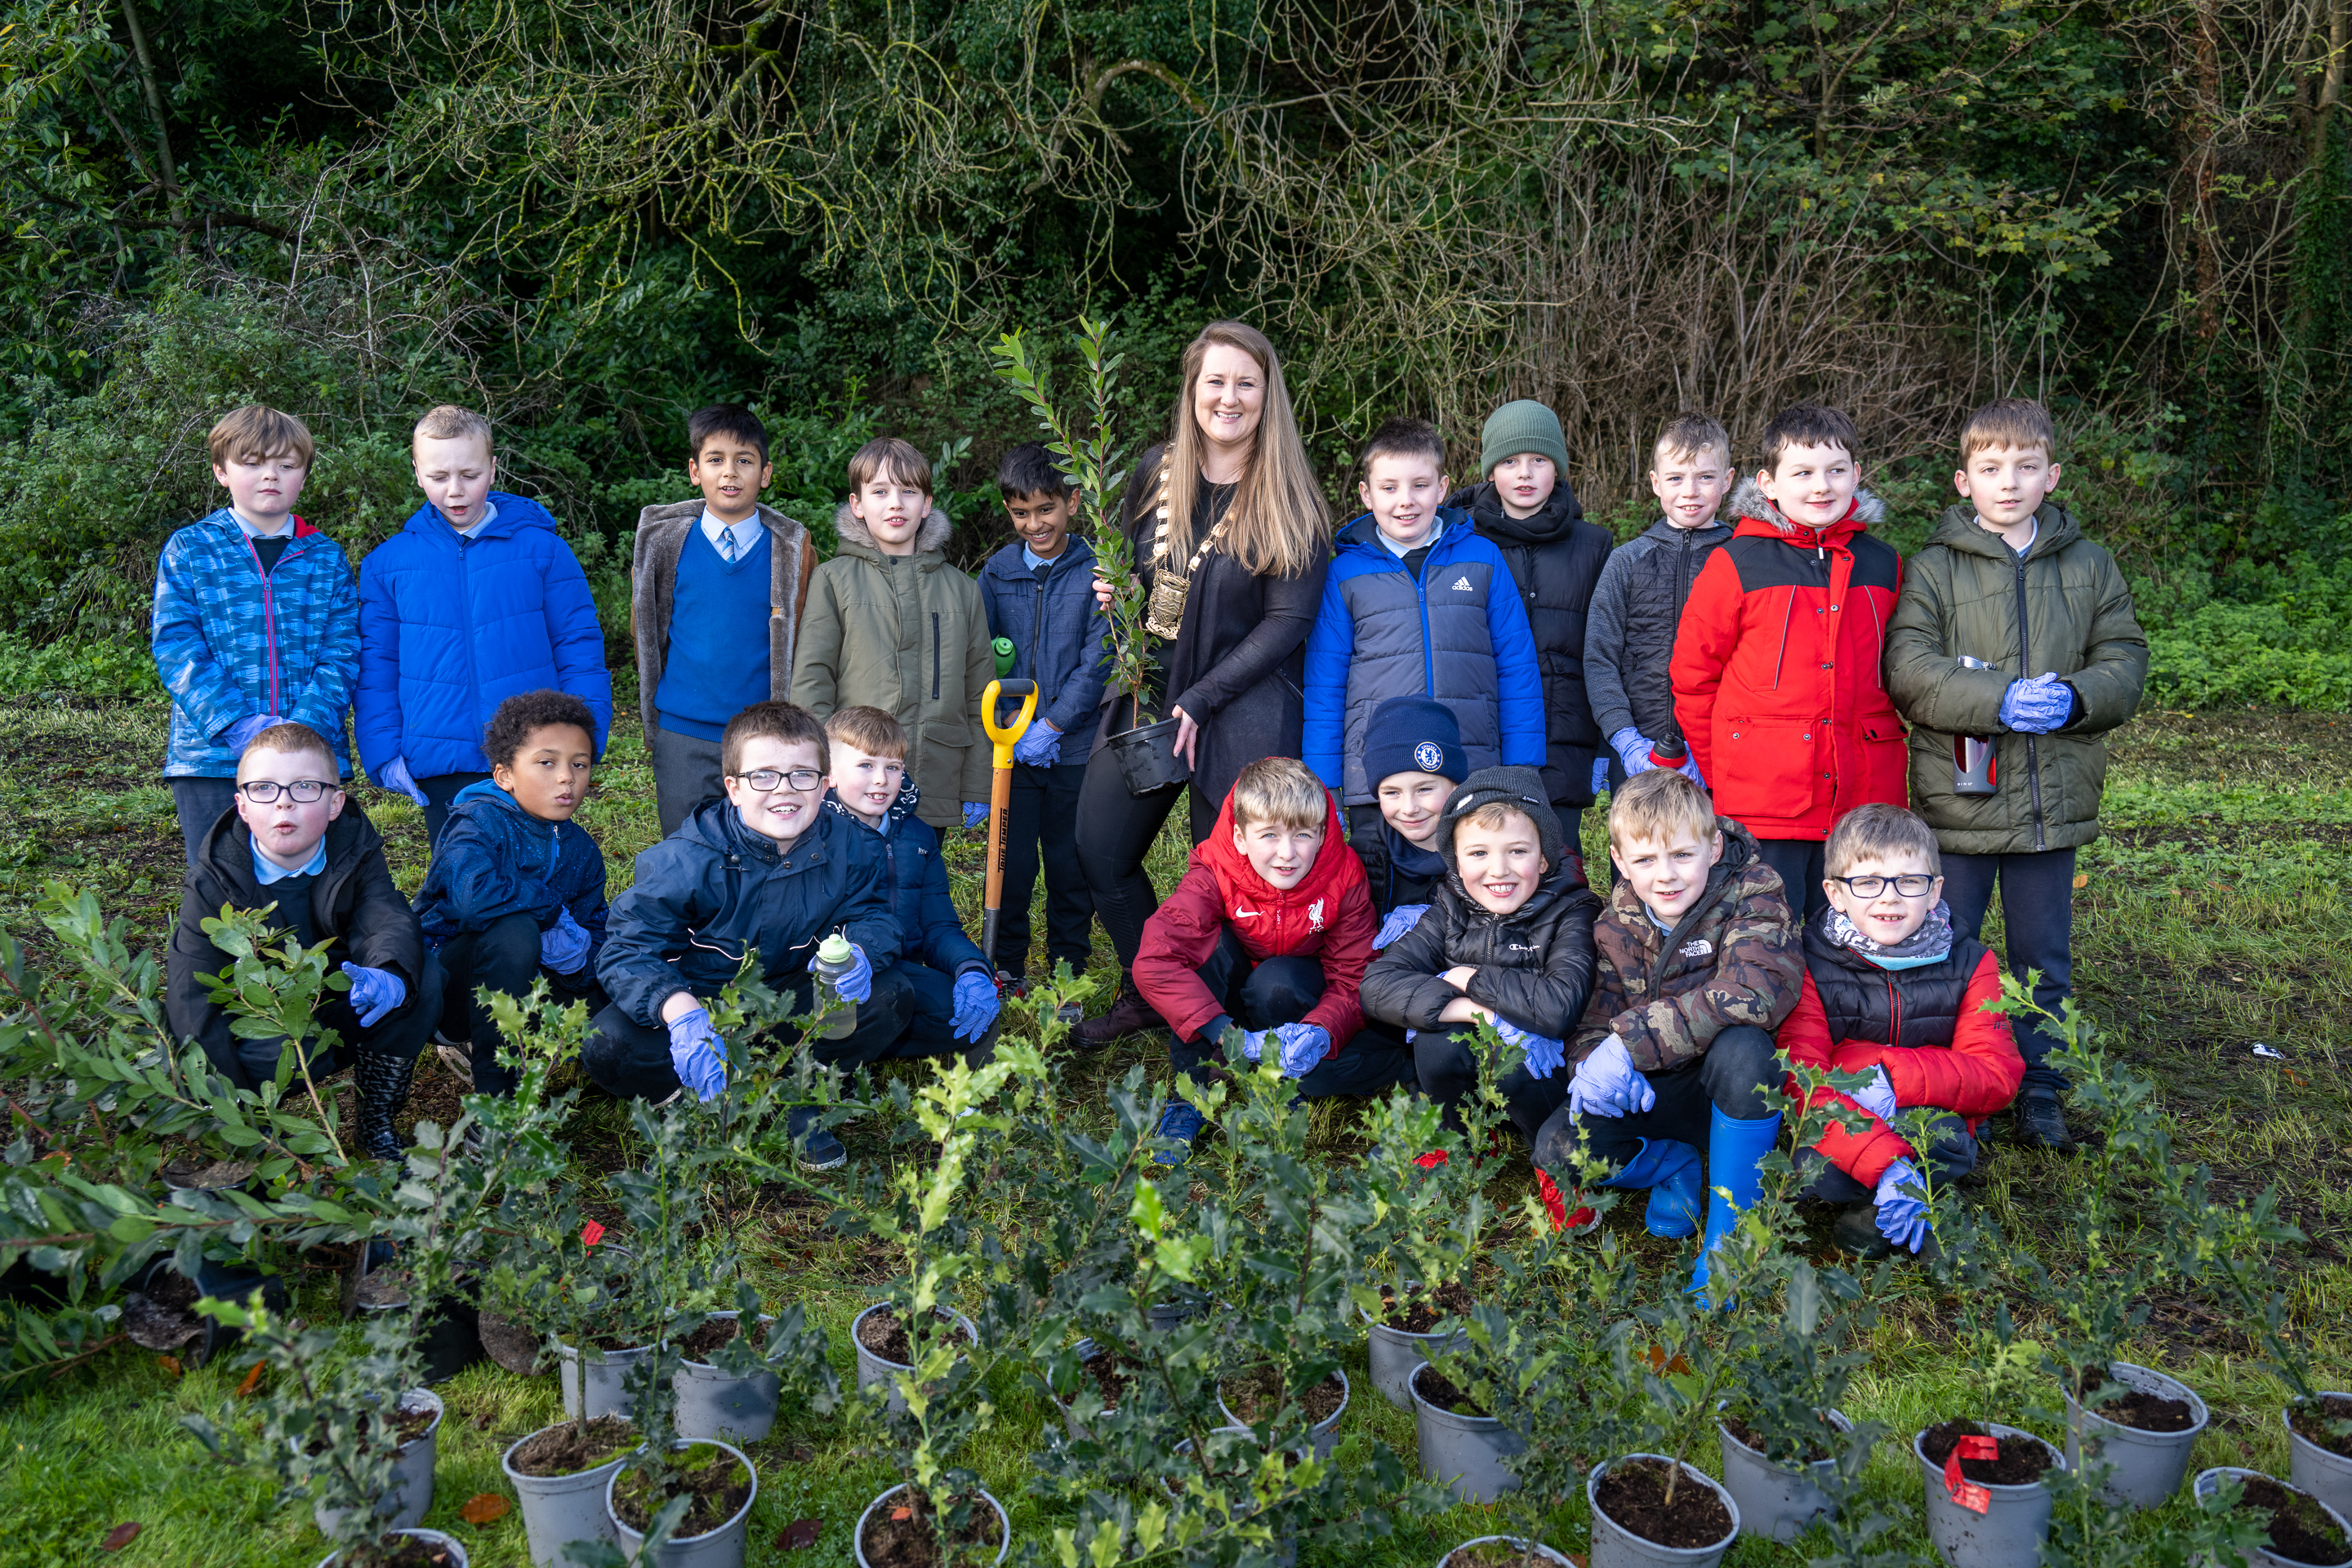 Launch Image of Mini Woodlands, Mayor of South Dublin Emma Murphy with local schoolchildren